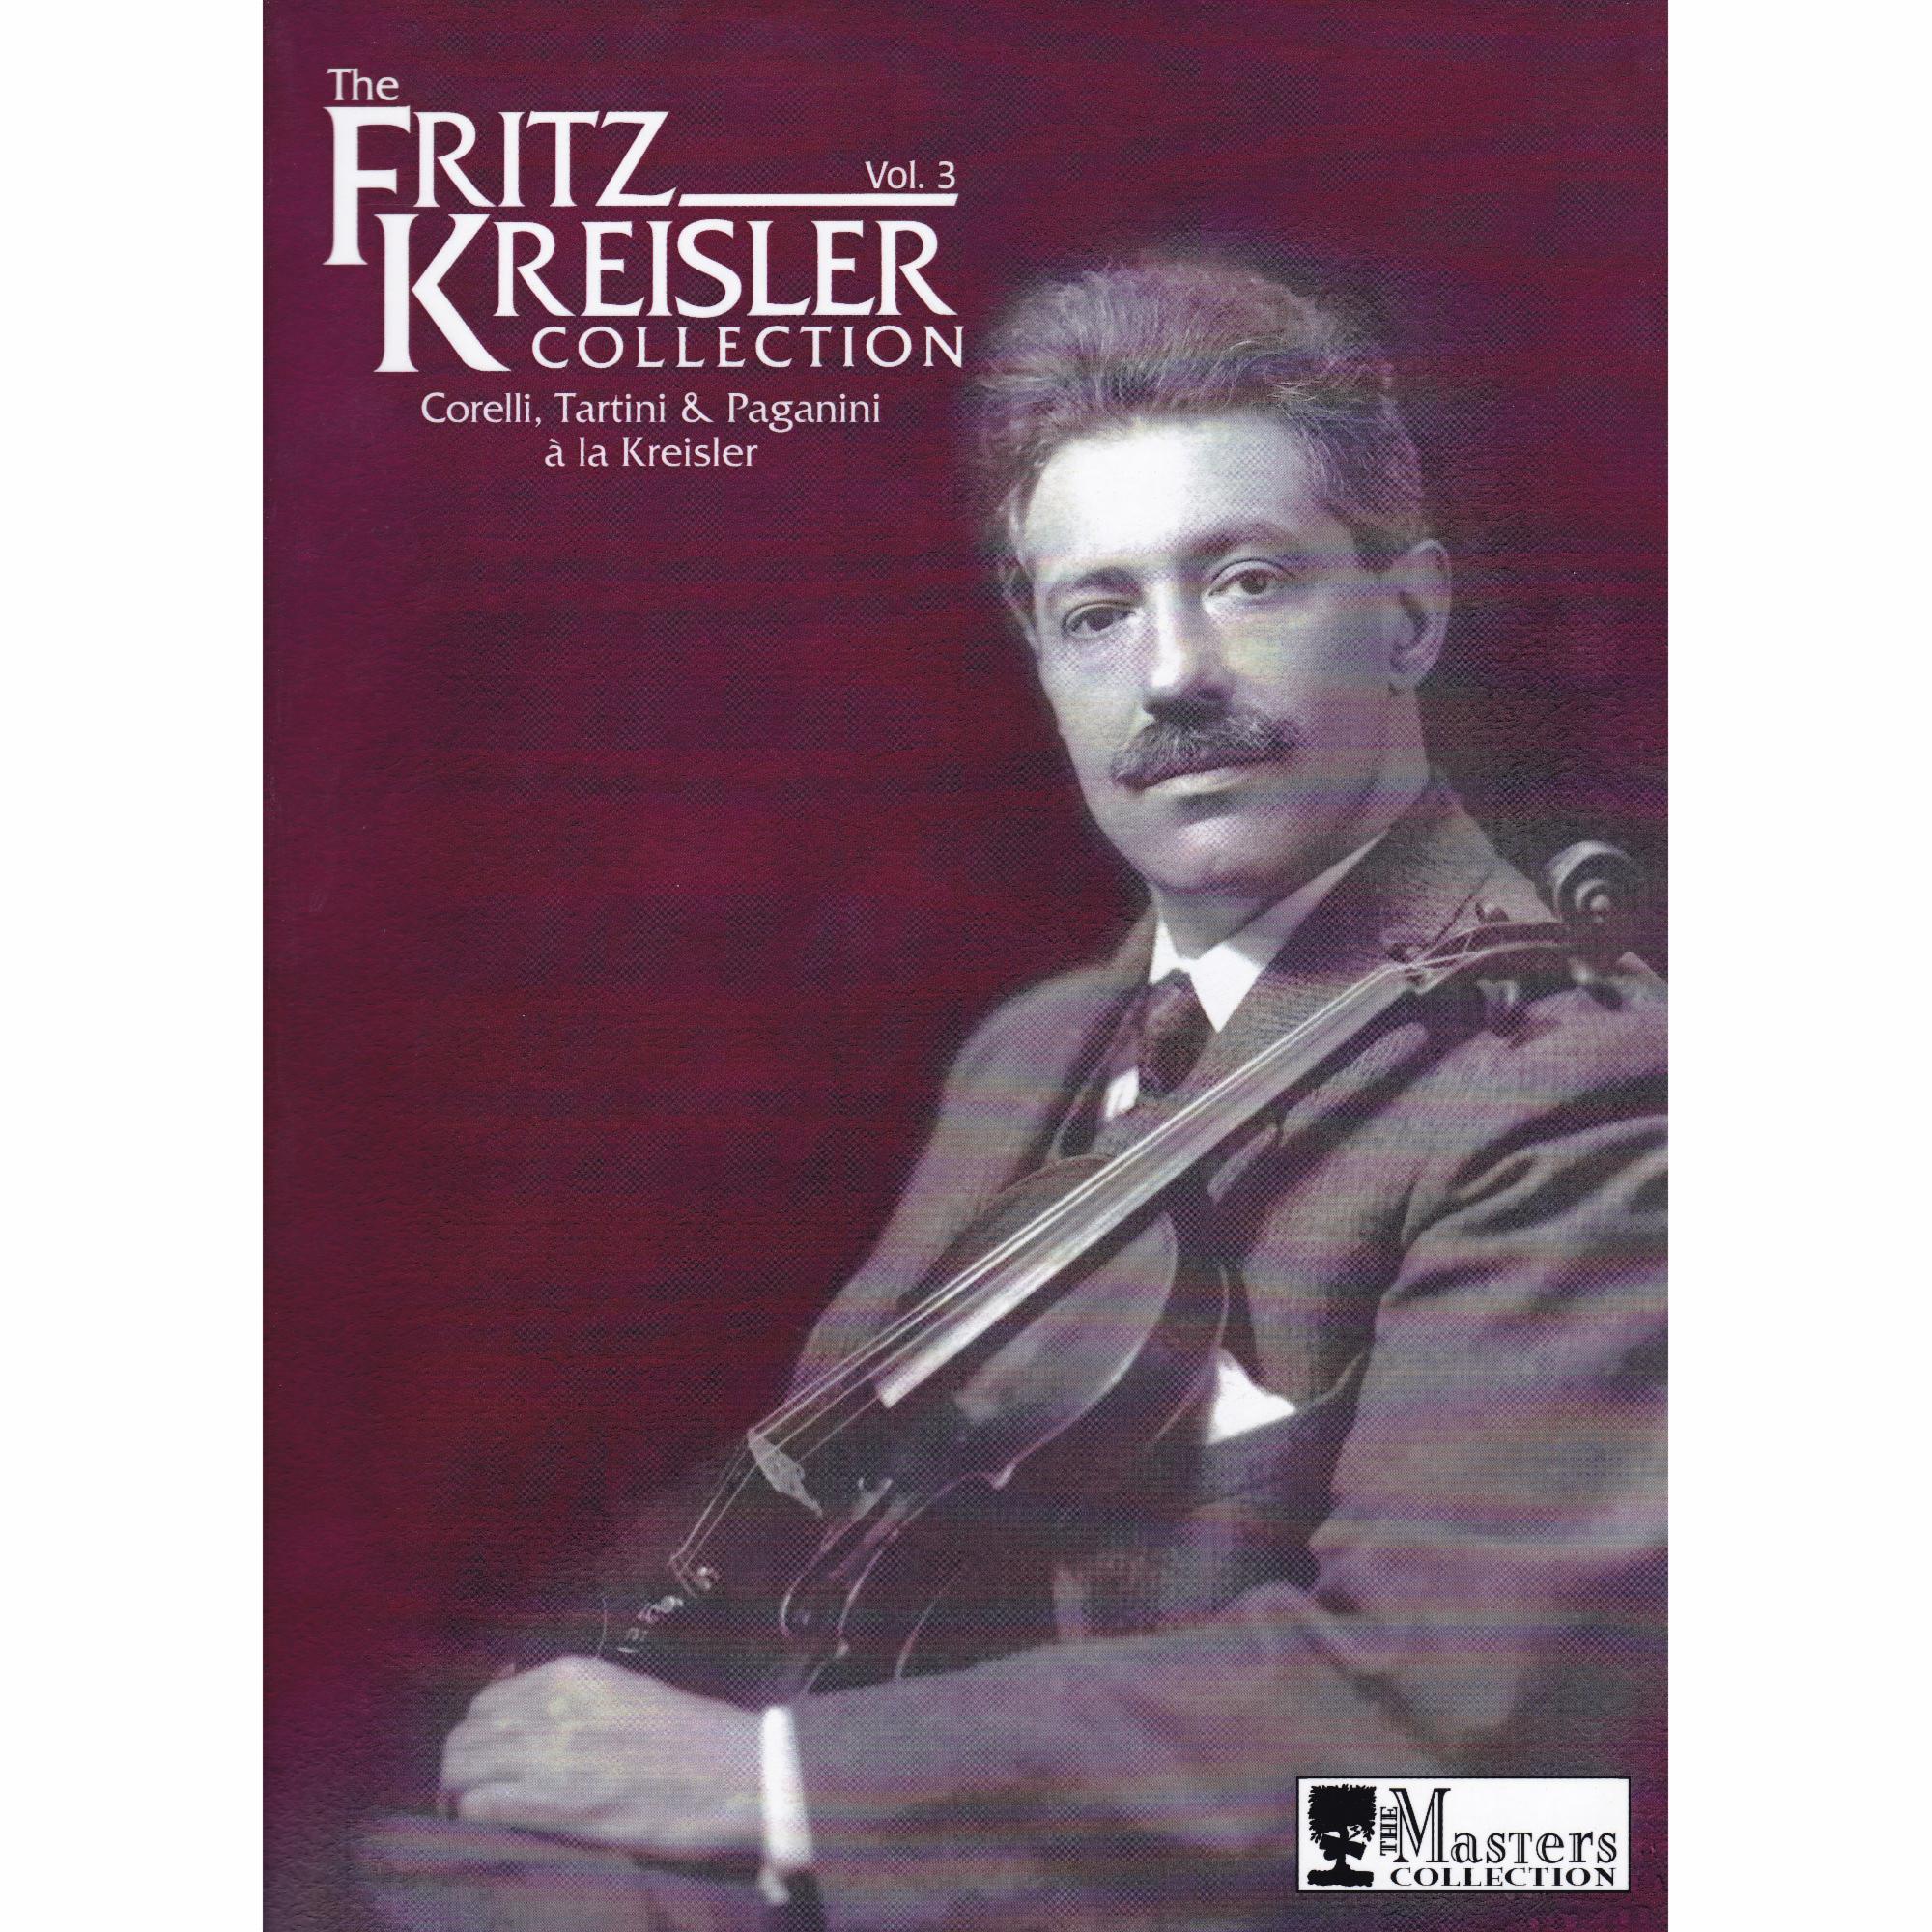 The Fritz Kreisler Collection, Volume III